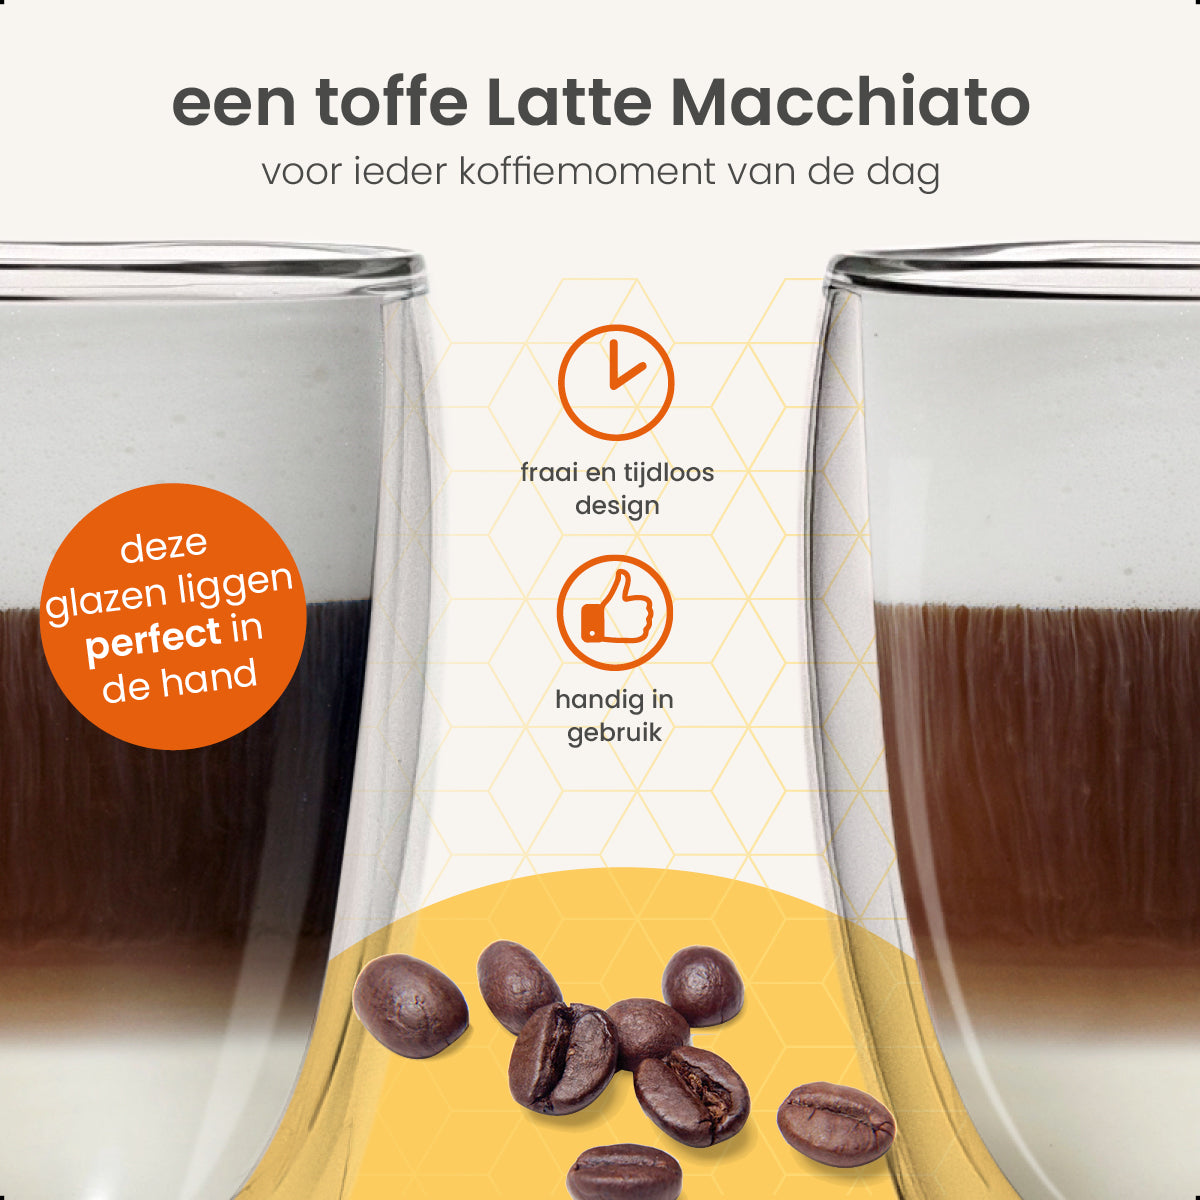 Goliving Dubbelwandige Koffieglazen - koffiekopjes - Kopjes - Glazen - Theeglazen - Latte Macchiato - Cappuccino - Set Van 6